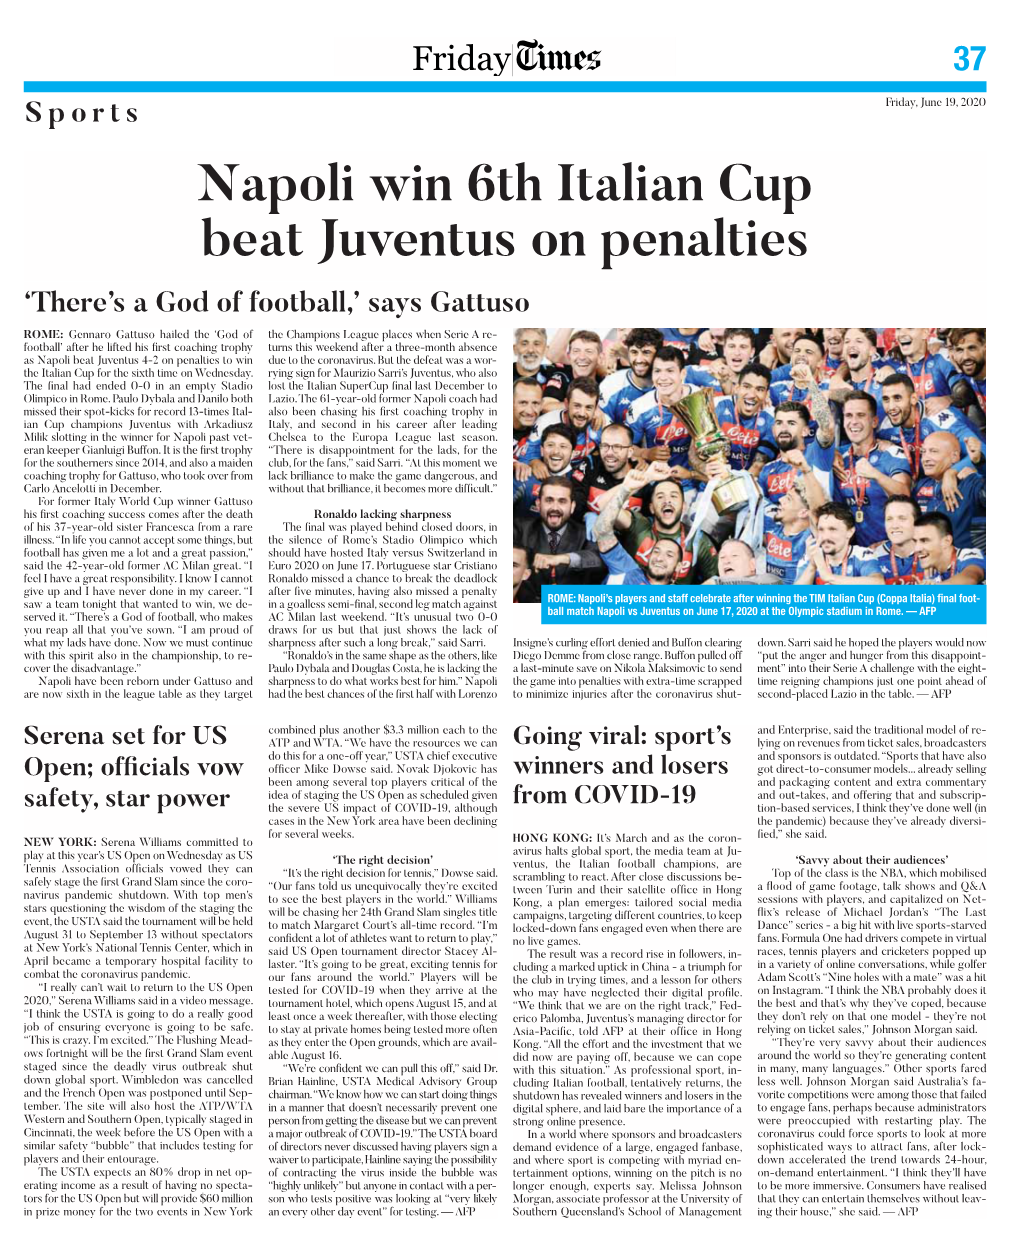 Napoli Win 6Th Italian Cup Beat Juventus on Penalties